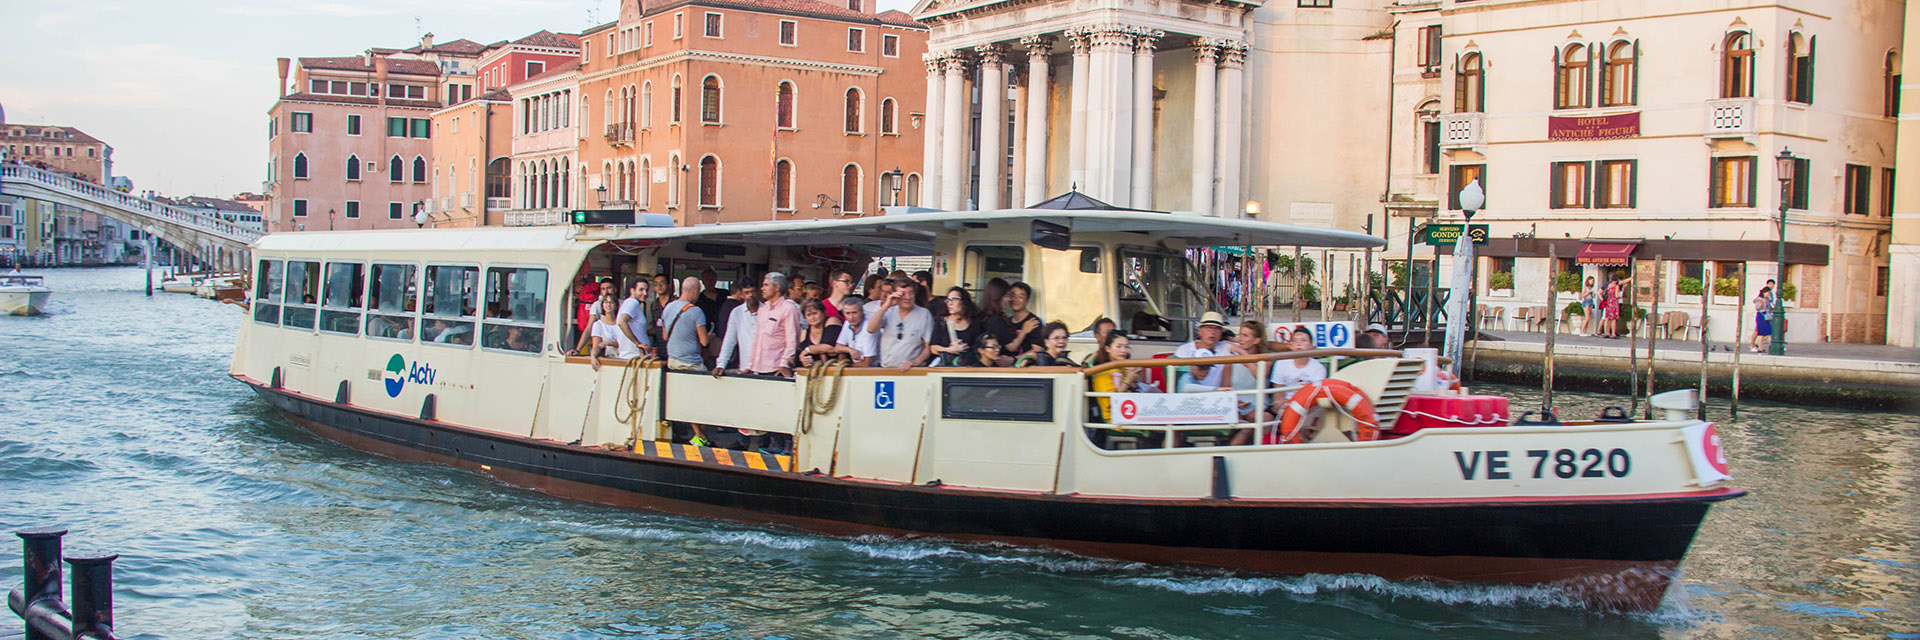 Veneza: como chegar e se locomover (inclui o porto de cruzeiros) 1